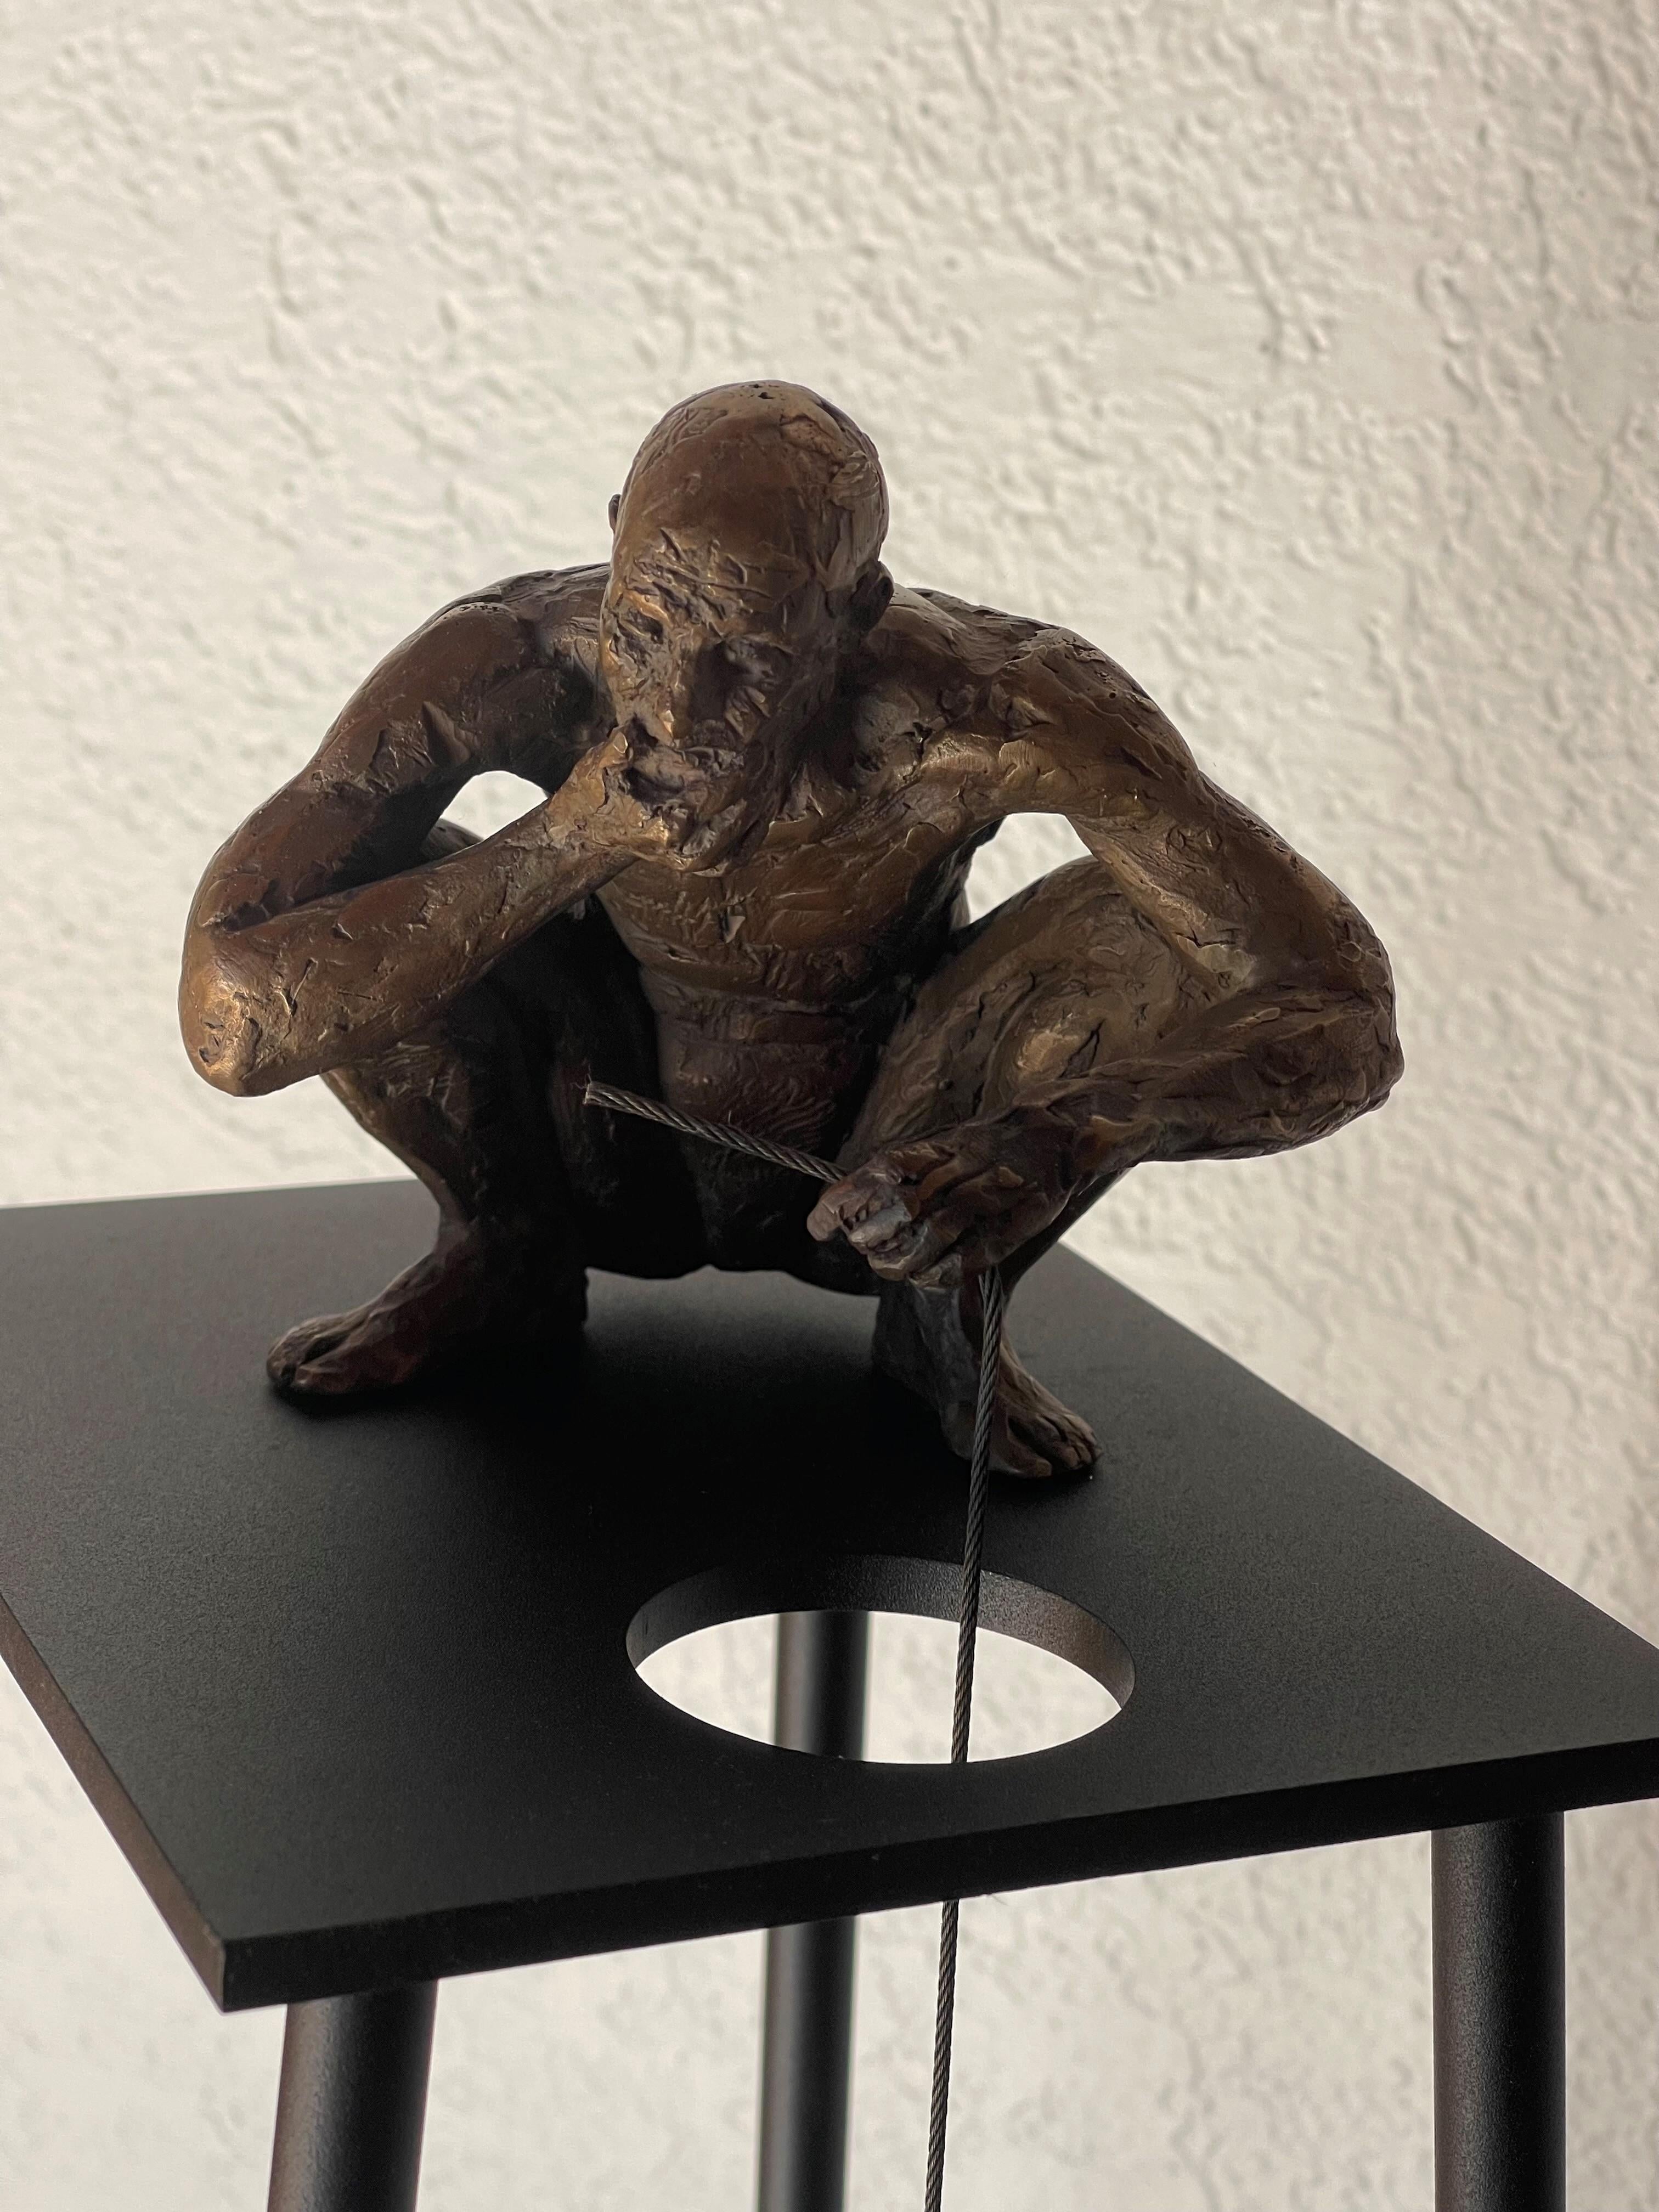 Bill Starke Nude Sculpture - "Catch of the Day " Sculpture